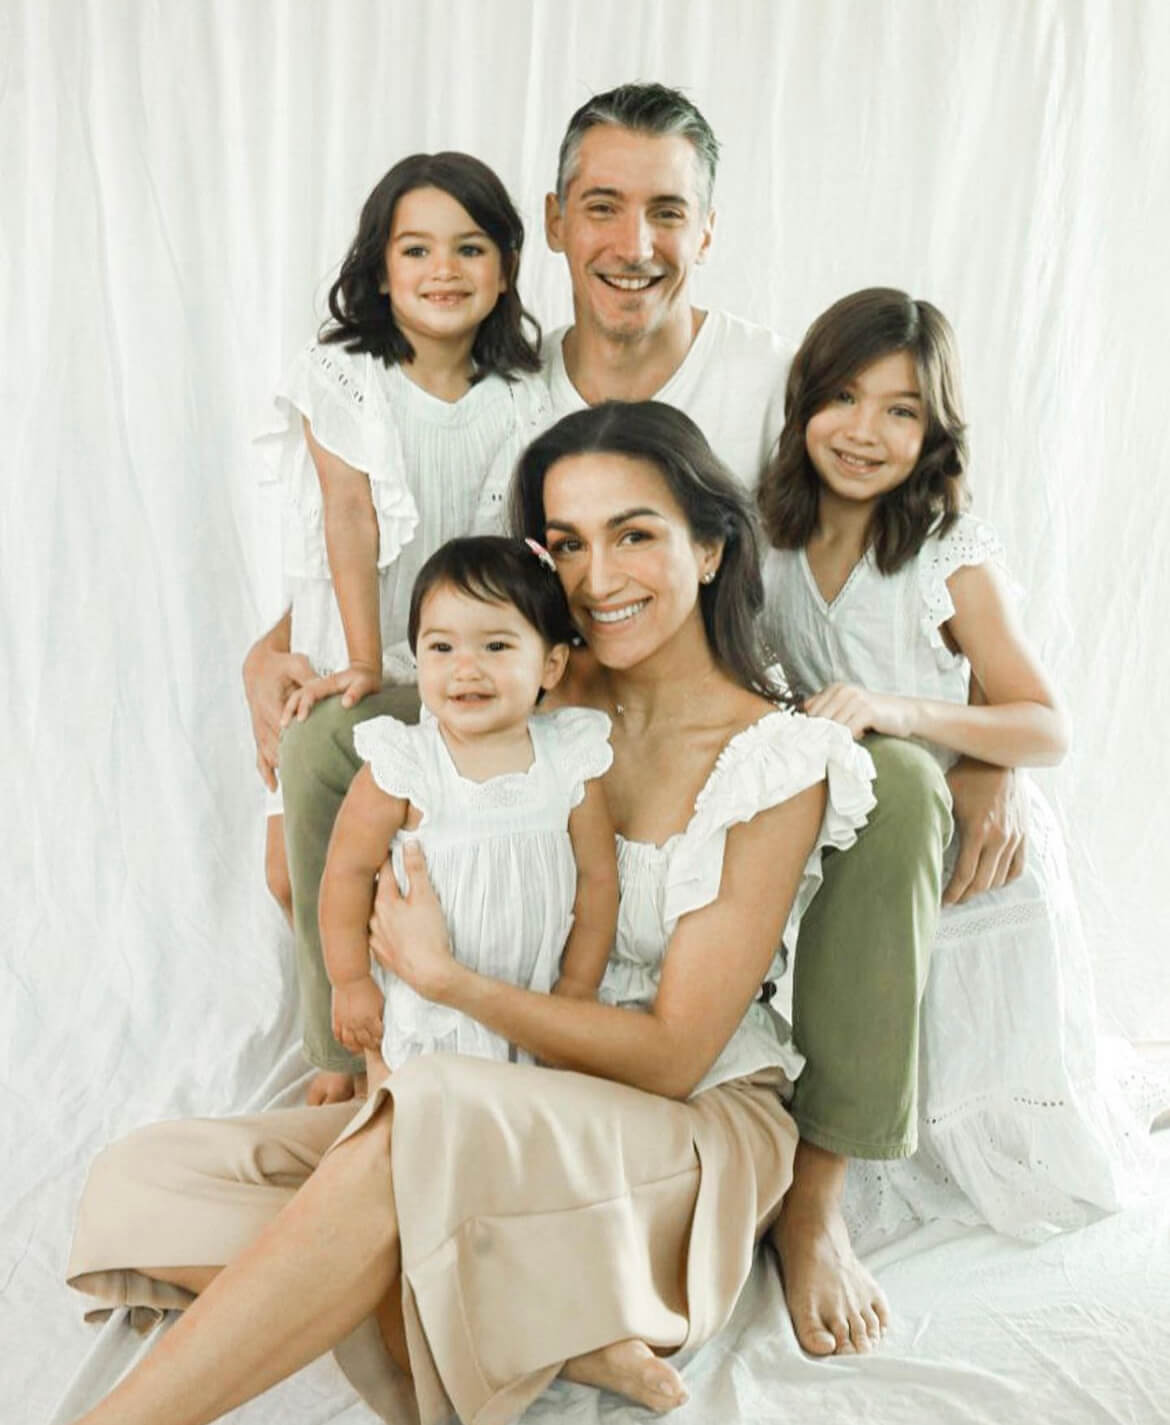 Stephanie Gonzalez, her husband Christian Gonzalez, and their three beautiful daughters